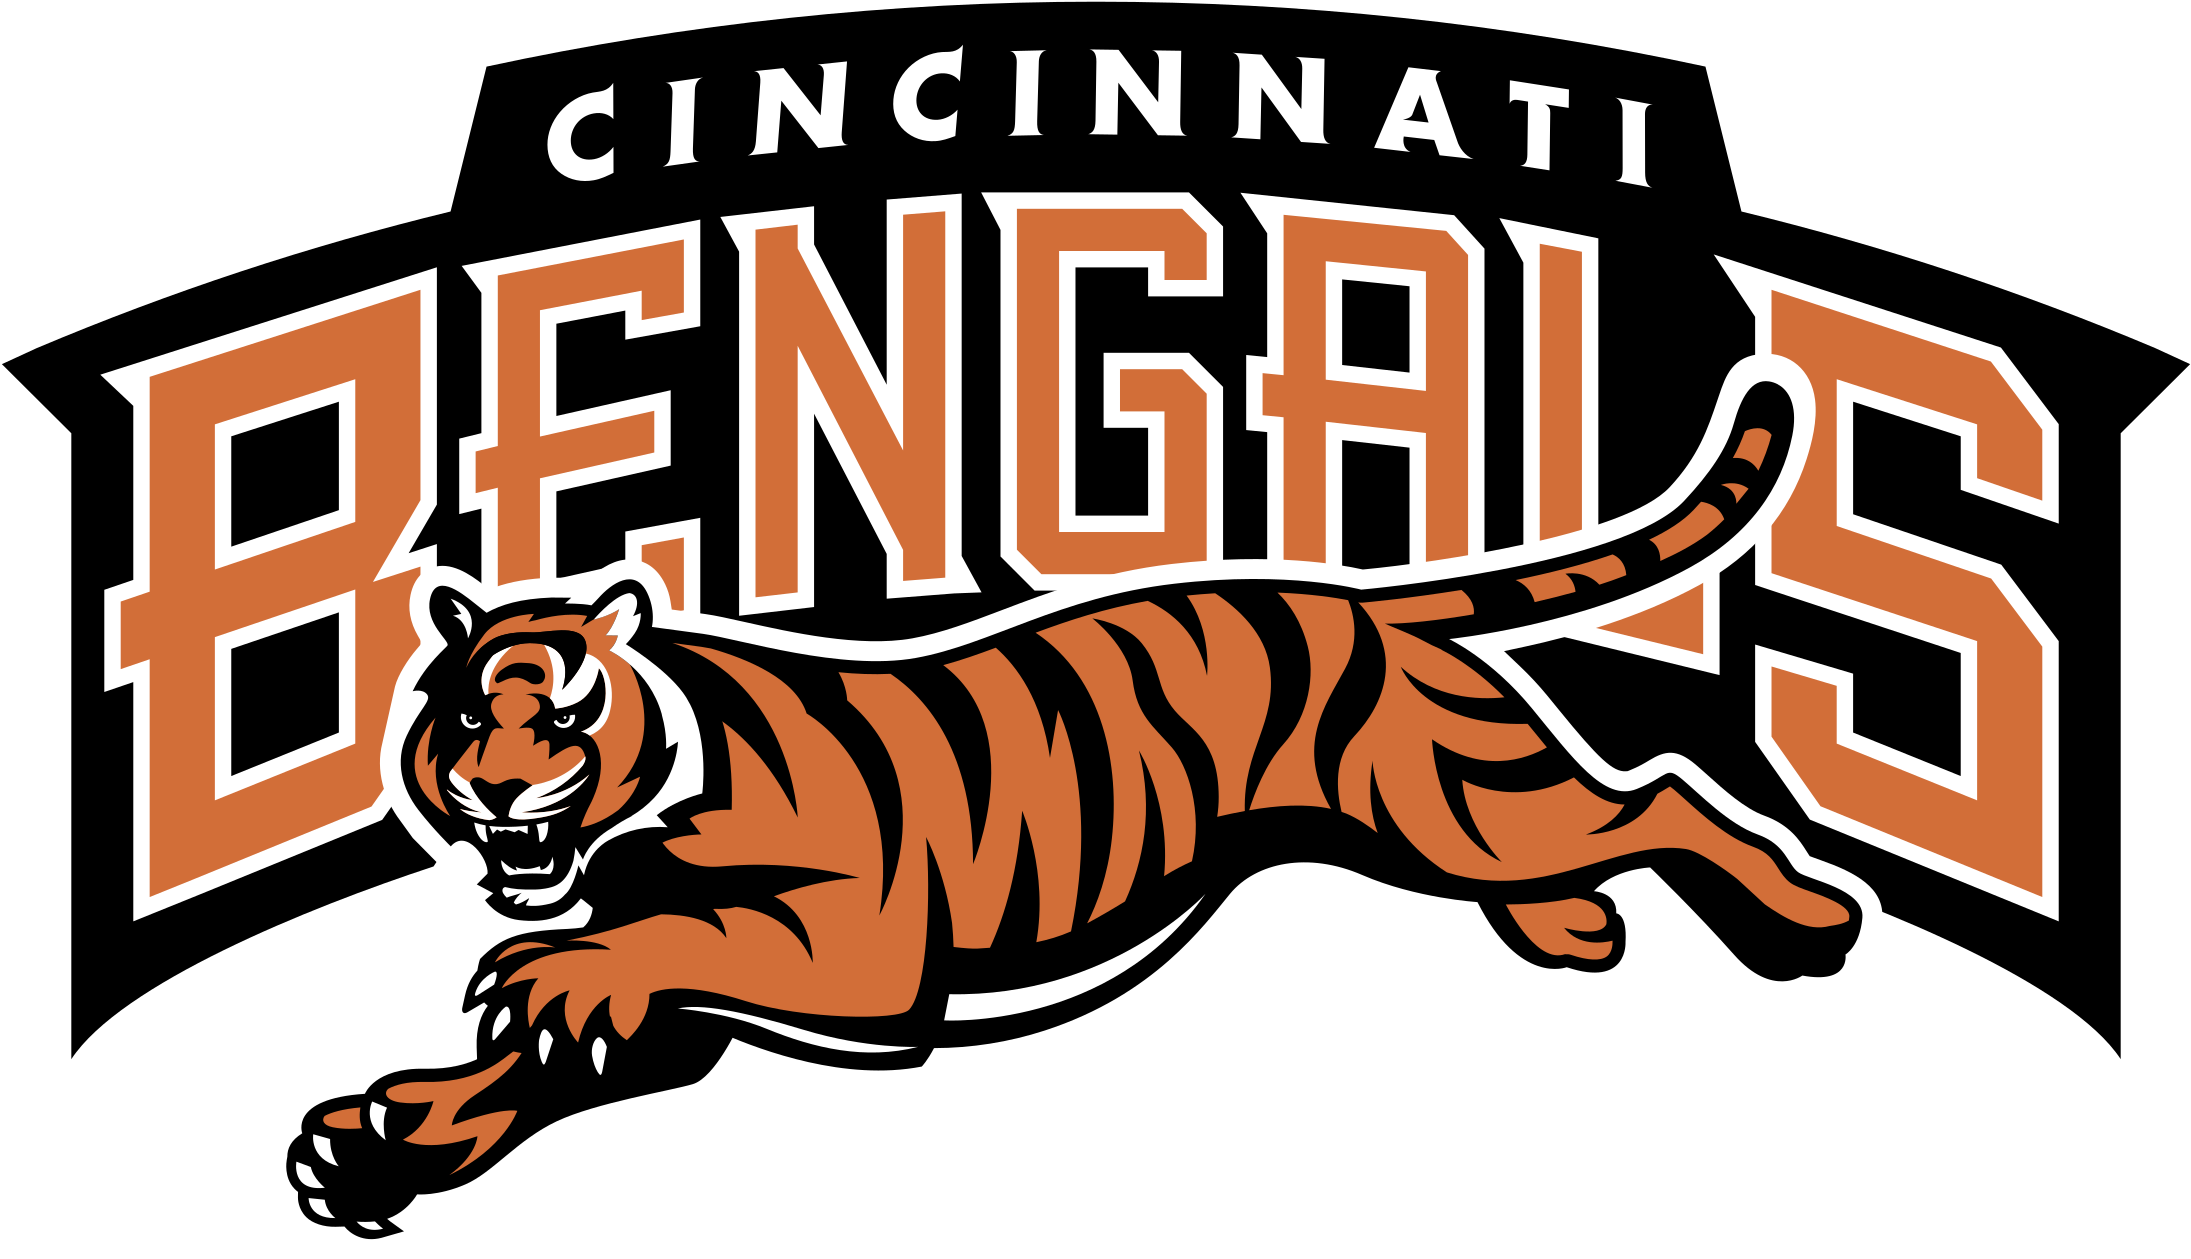 Cinncinati Bengals Logo Png Transparent - Cincinnati Bengals Schedule 2018 (2400x2400), Png Download